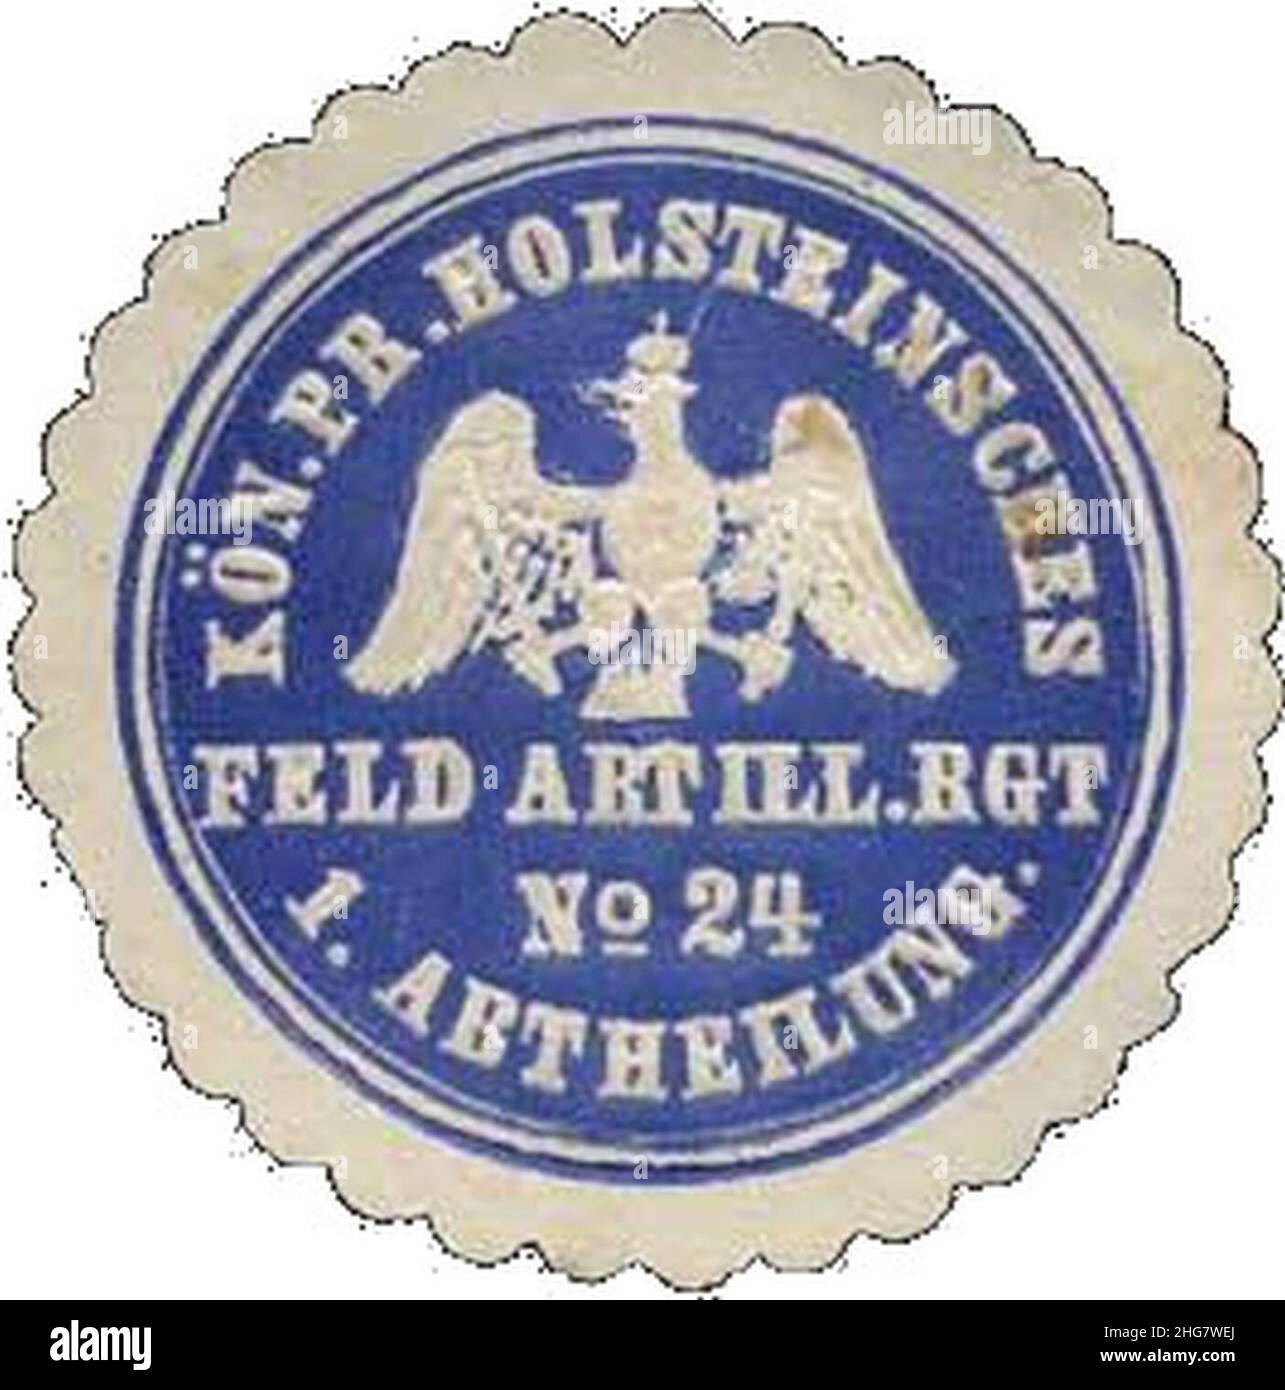 Siegelmarke Holsteinsches Feld-Artillerie-Regiment No. 24 freigestellt. Stock Photo